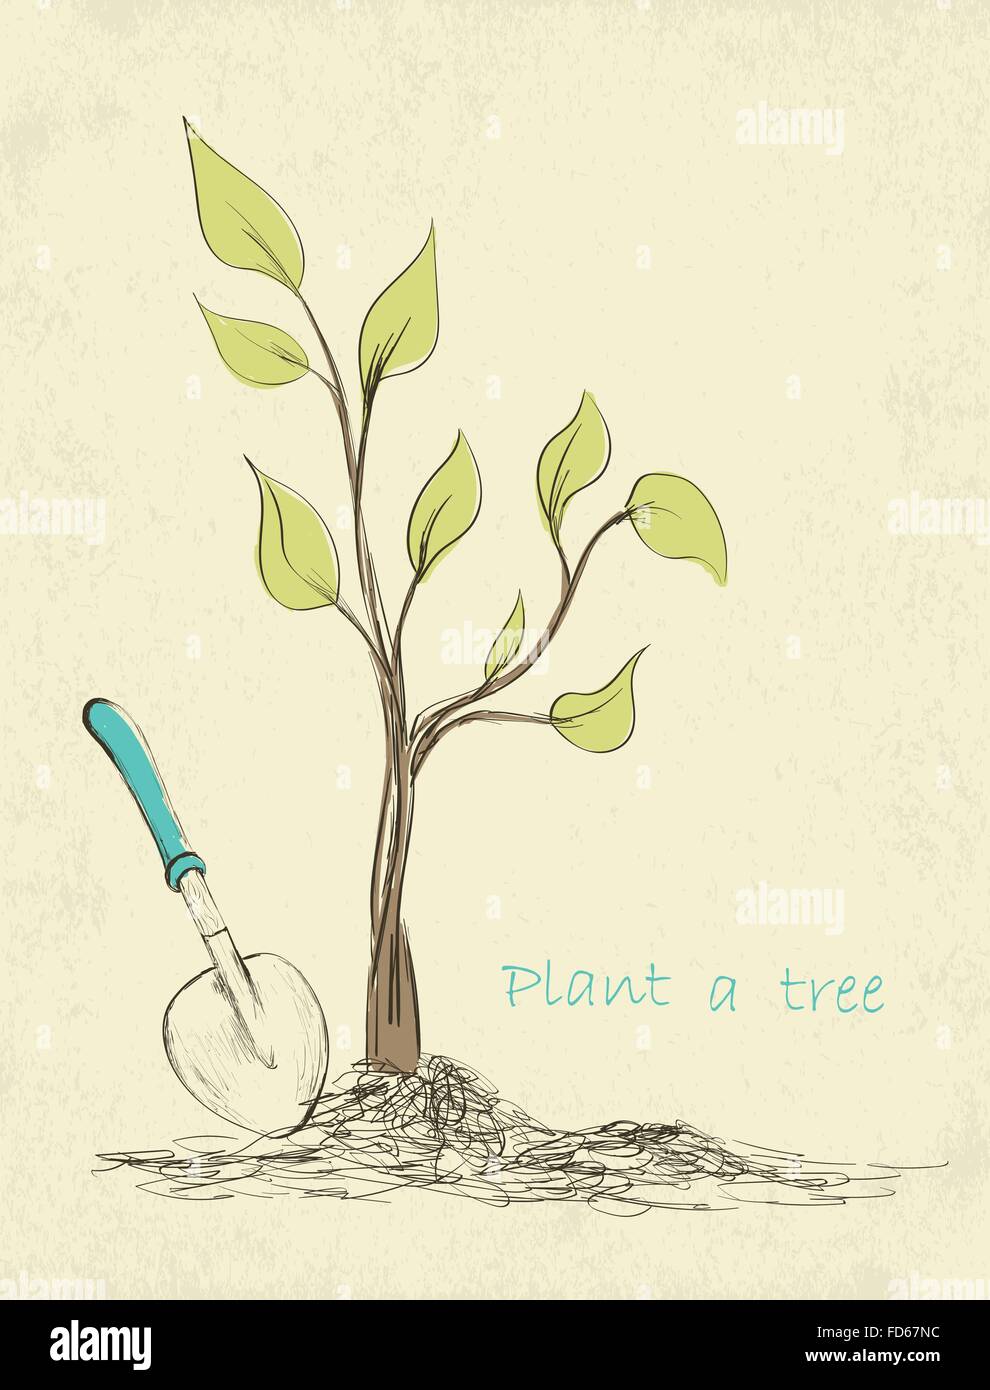 Memory Drawing - Tree plantation Artist :- Nur Shaikh | Facebook-saigonsouth.com.vn